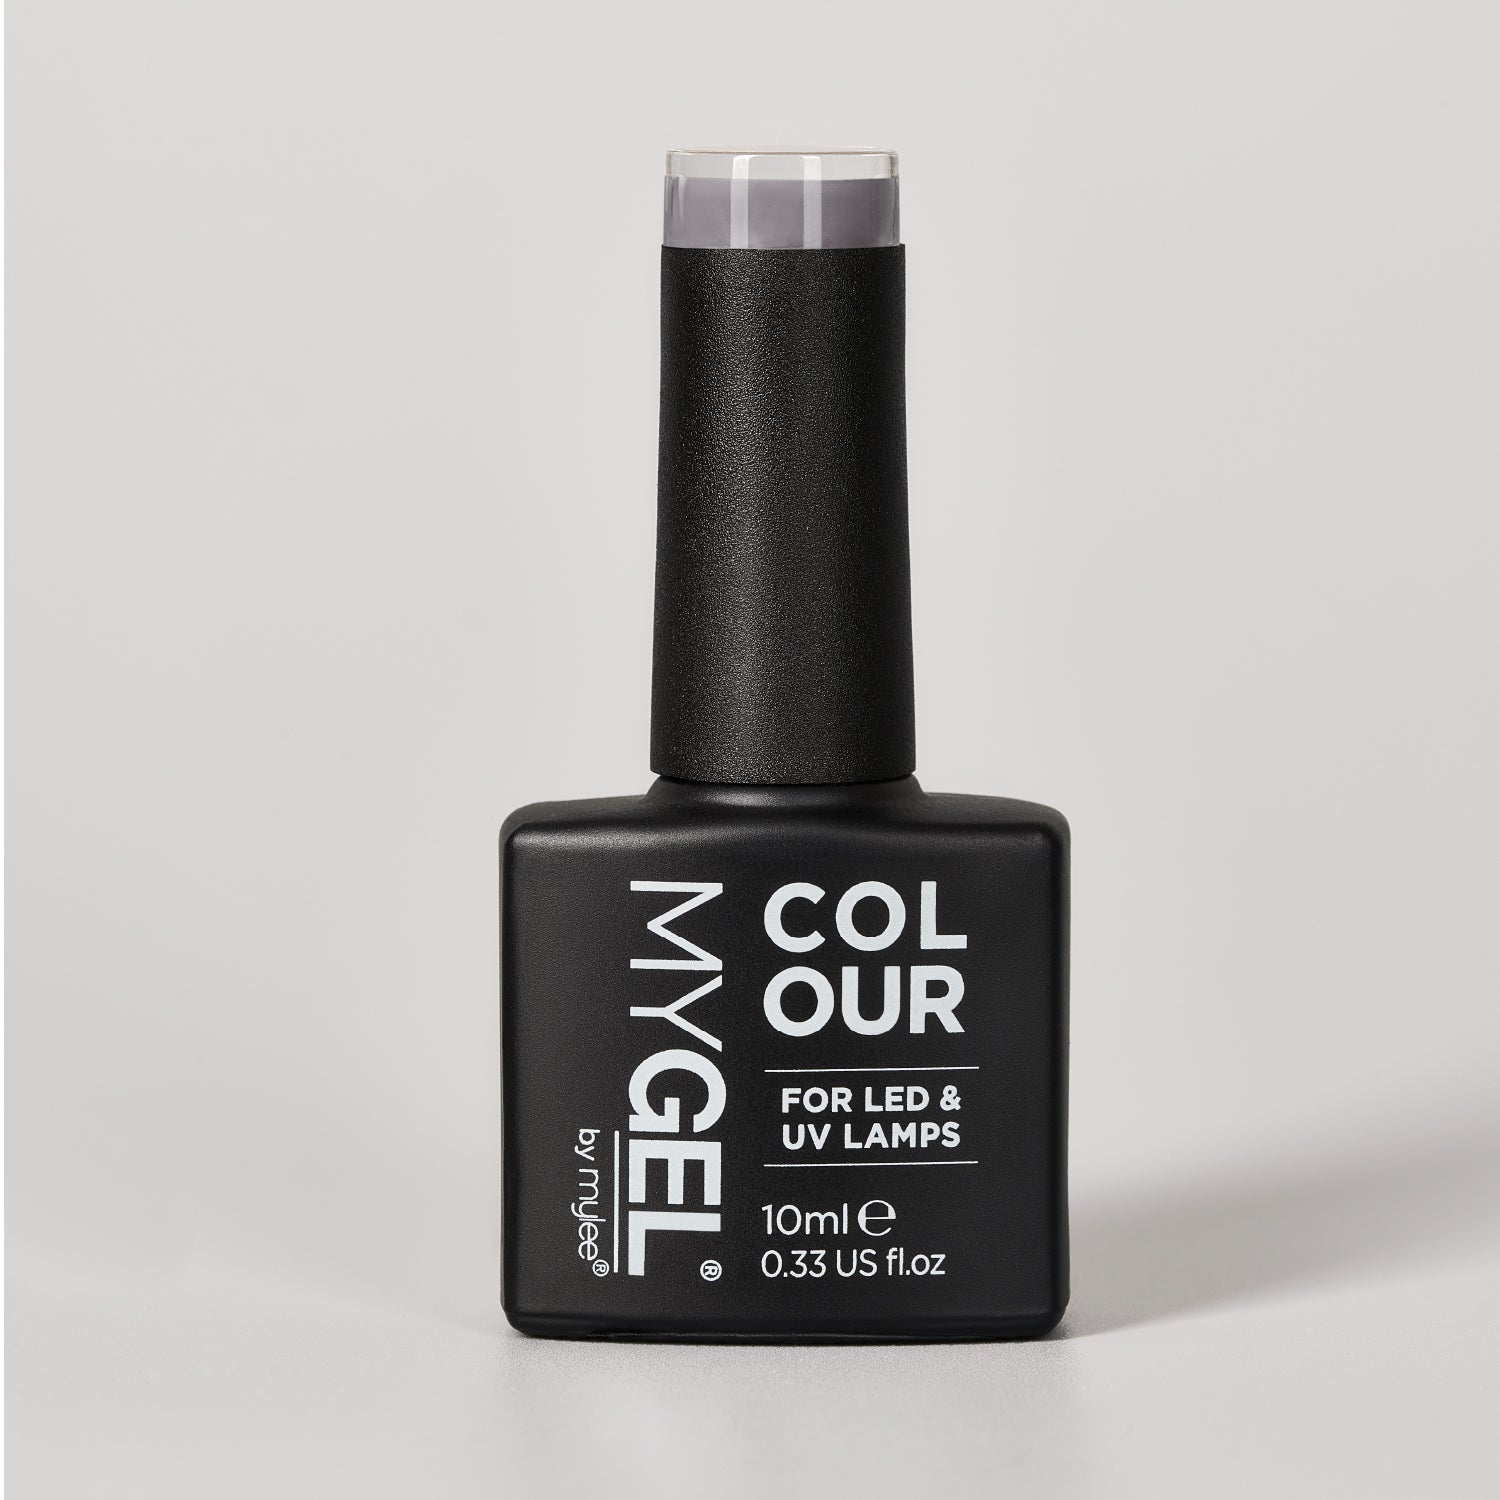 Mylee Behind The Scenes LED/UV Gel Nail Polish - 10ml – Long Lasting At Home Manicure/Pedicure, High Gloss And Chip Free Wear Nail Varnish